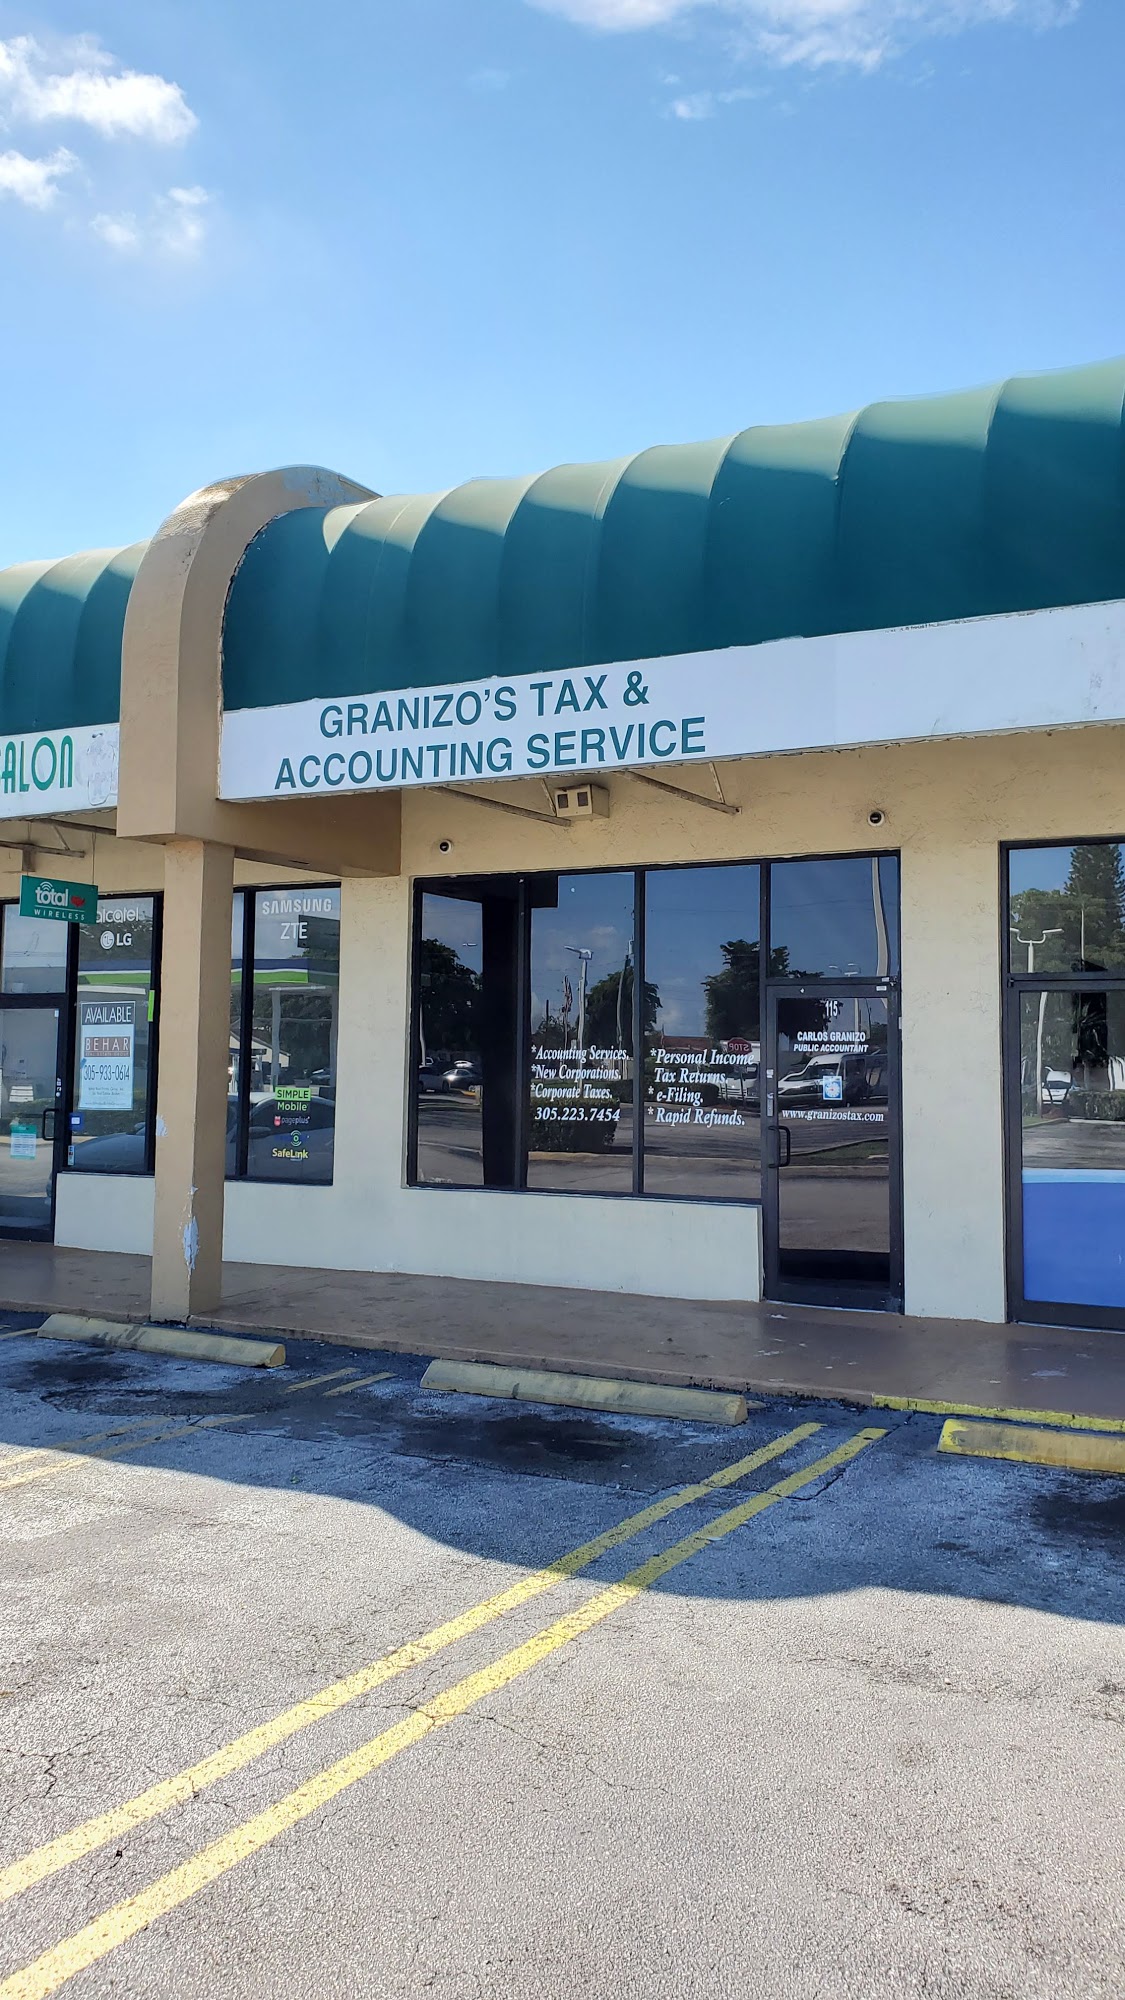 Granizo's Tax & Accounting Services